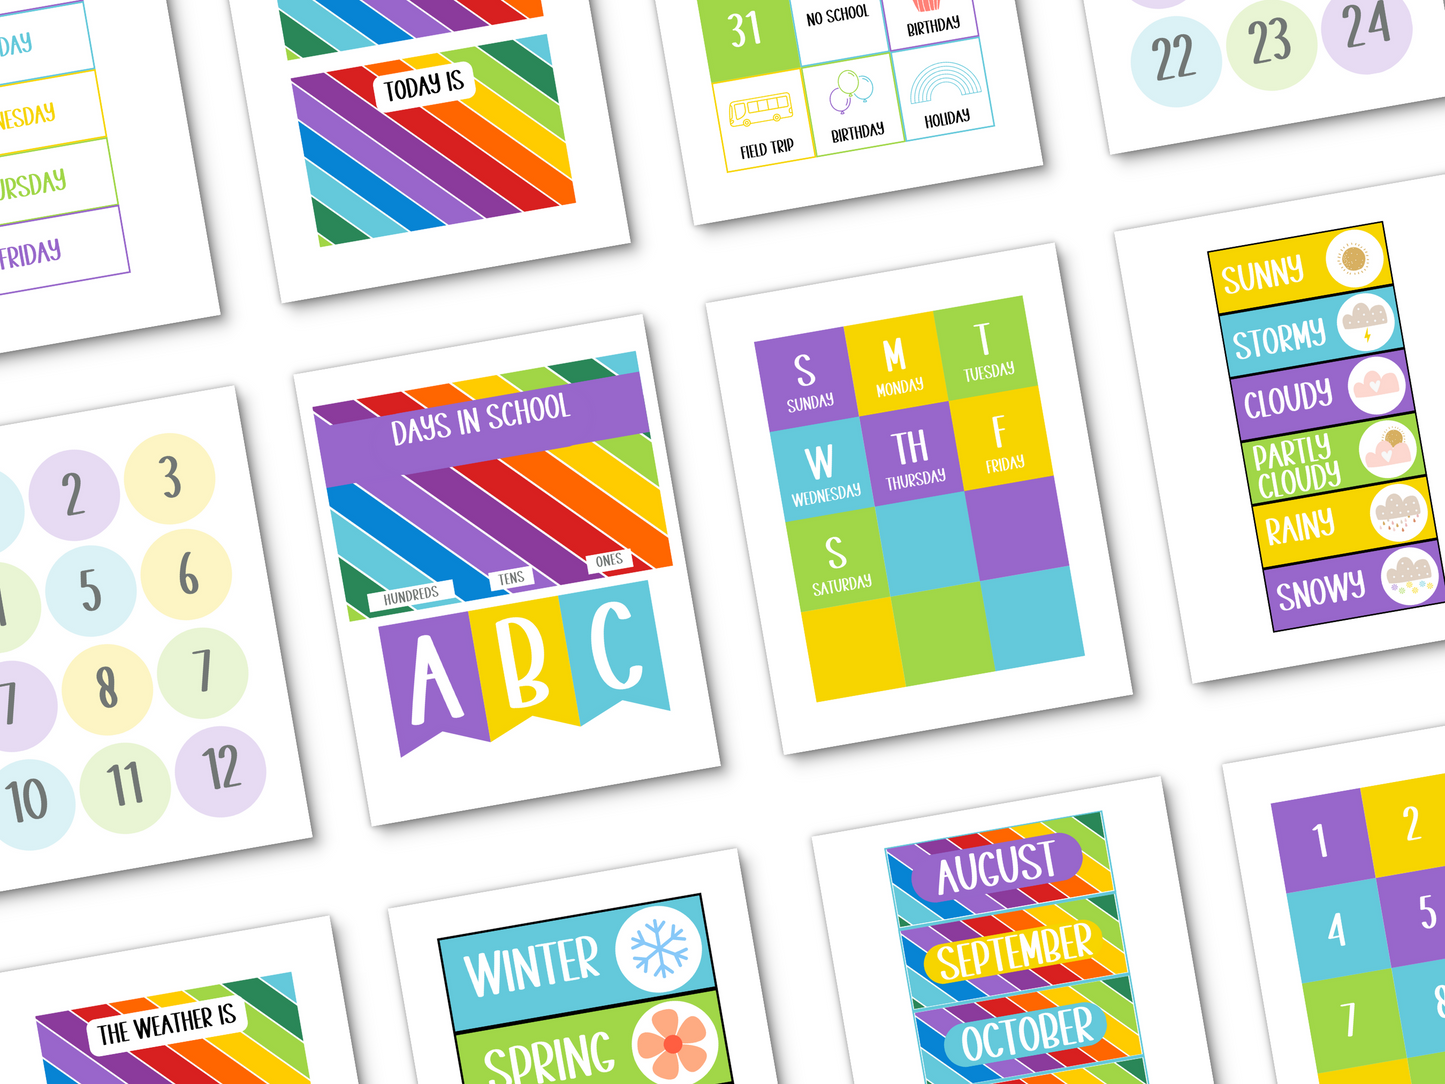 Bright Rainbow Stripe Classroom Flip Calendar